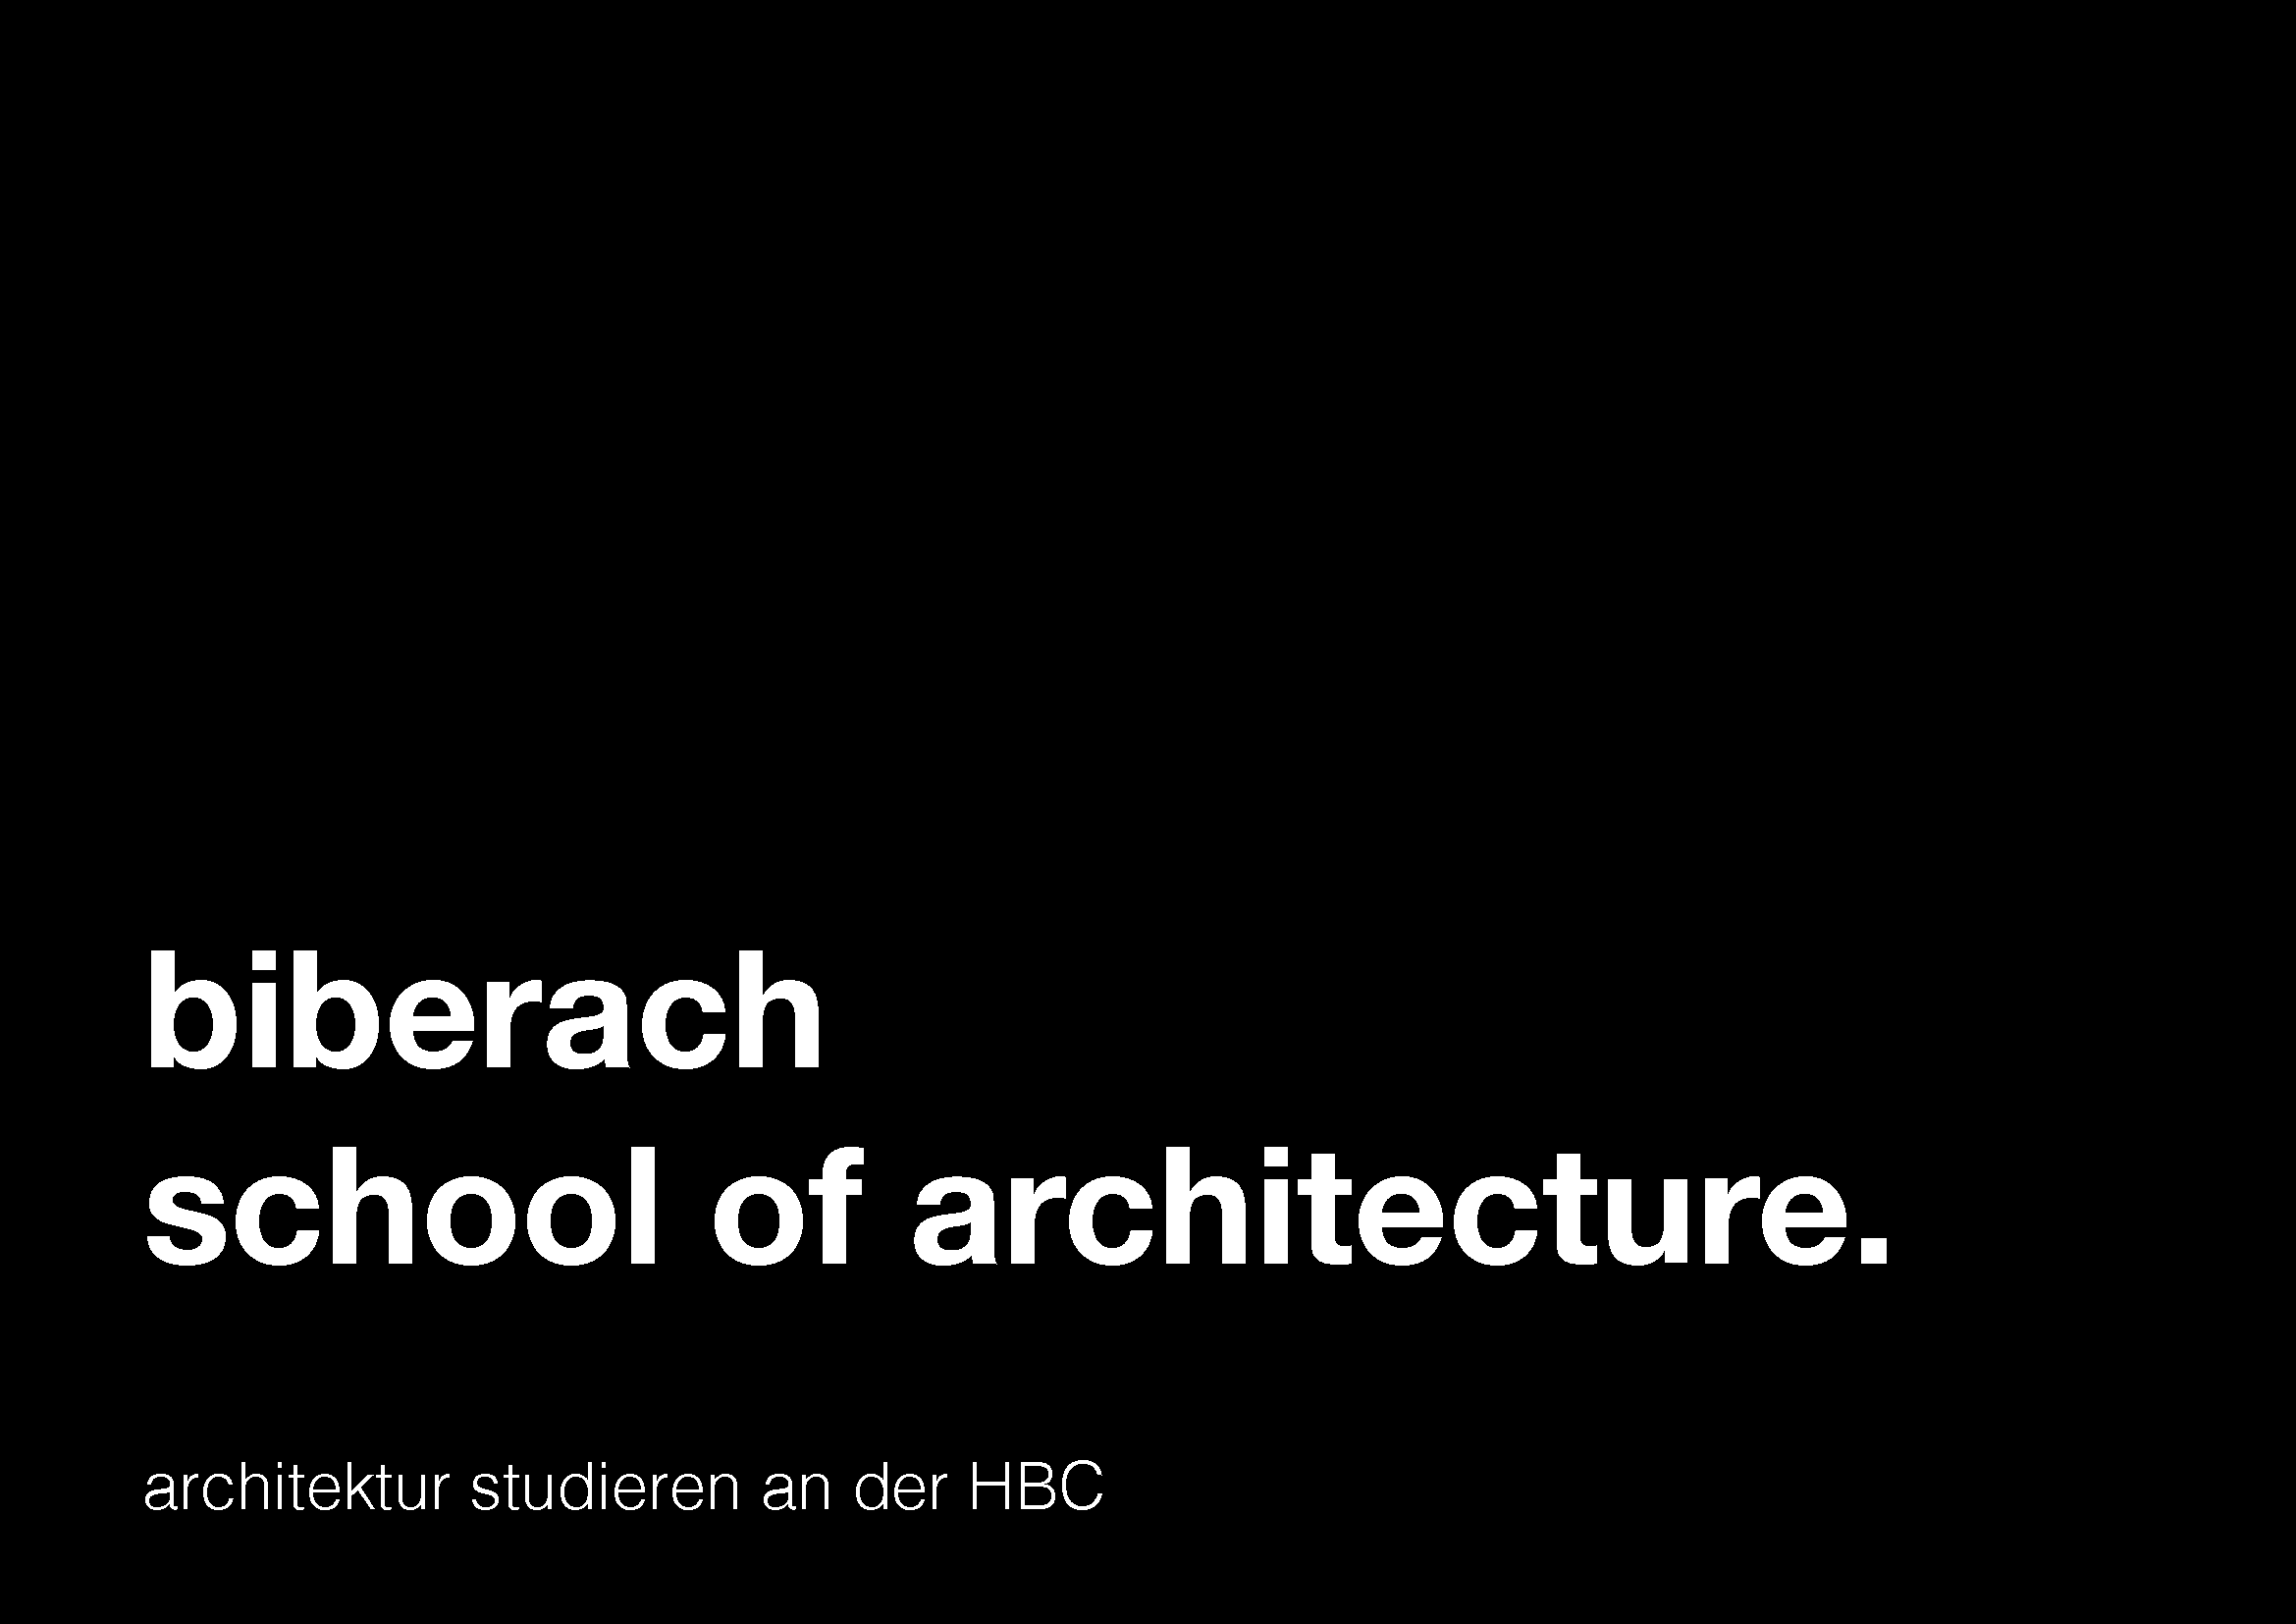 Biberach School of Architecture